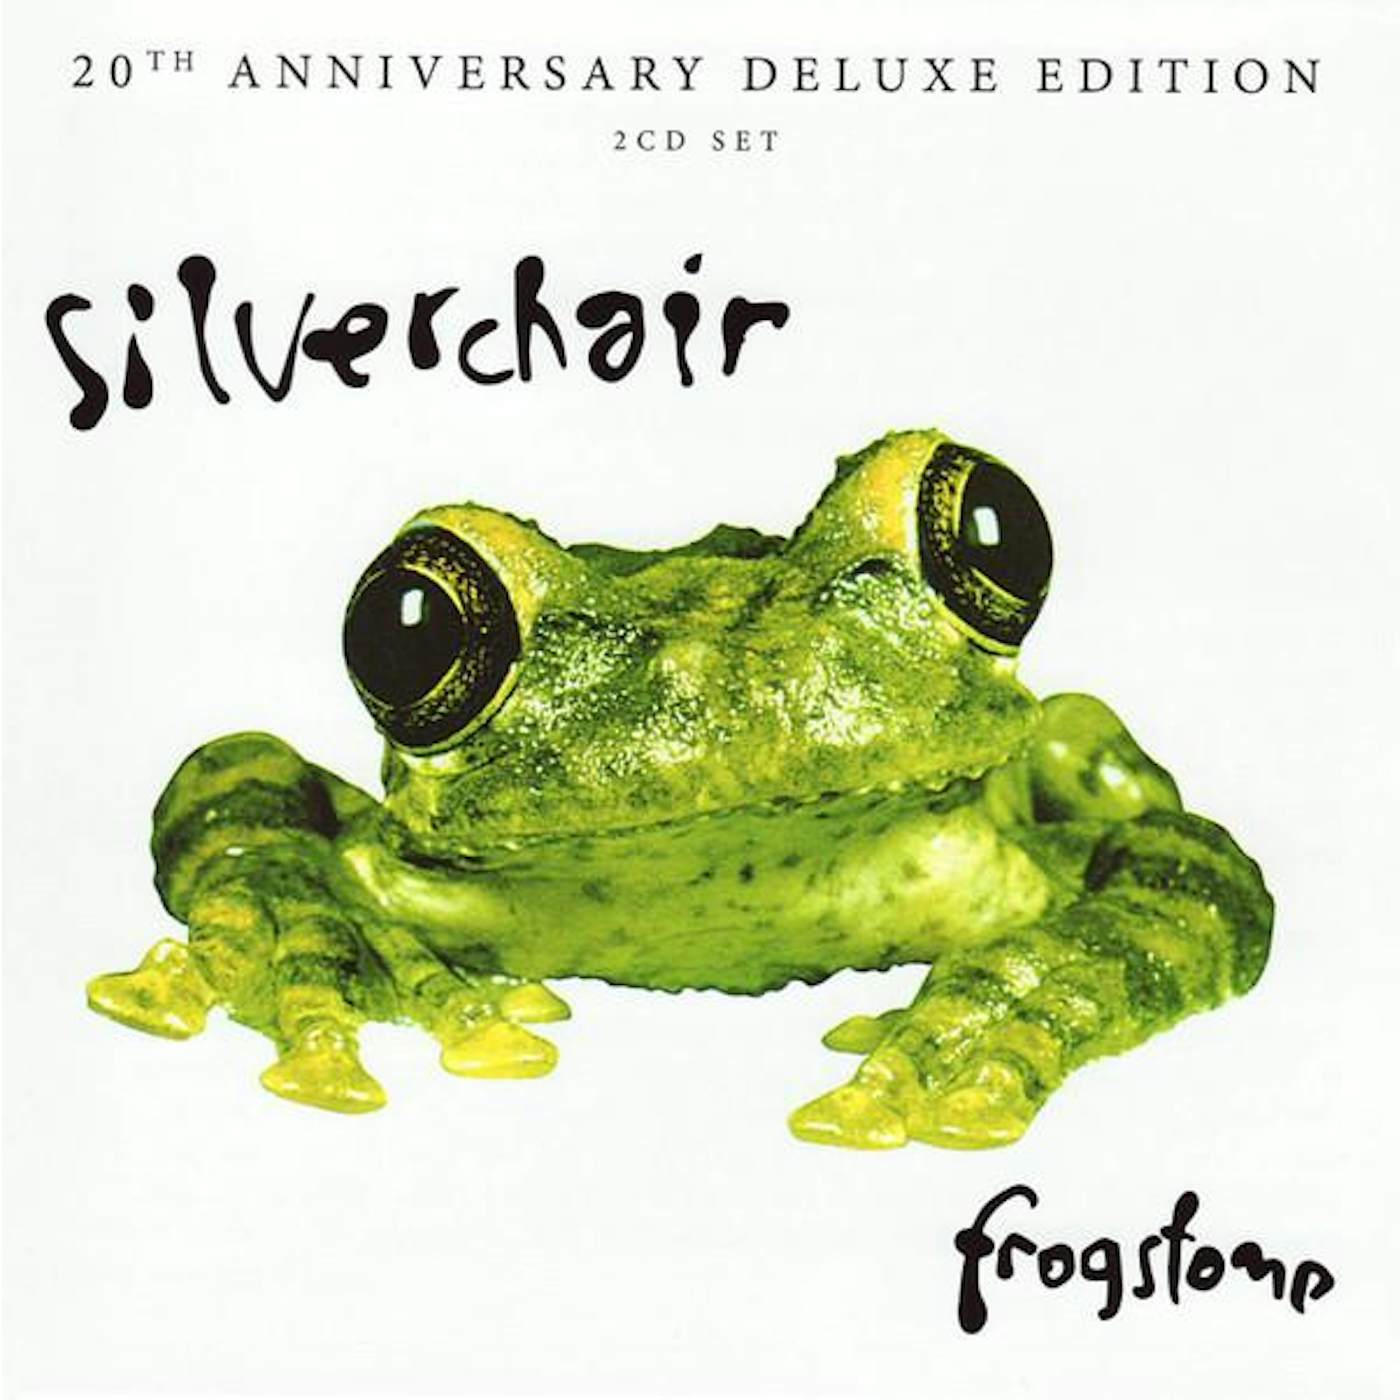 Silverchair FROGSTOMP (20TH ANNIVERSARY) CD